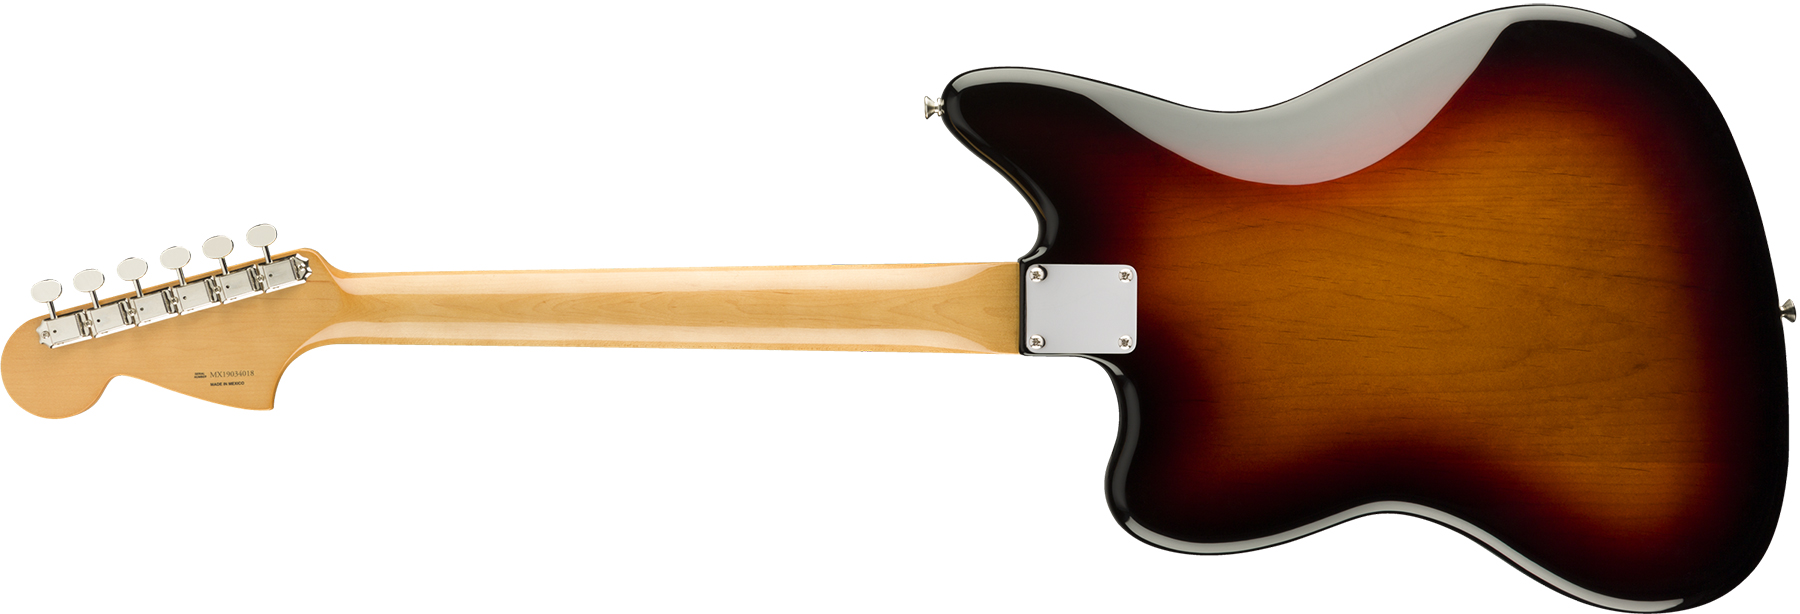 Fender Jaguar 60s Vintera Vintage Mex Pf - 3-color Sunburst - Retro rock electric guitar - Variation 1